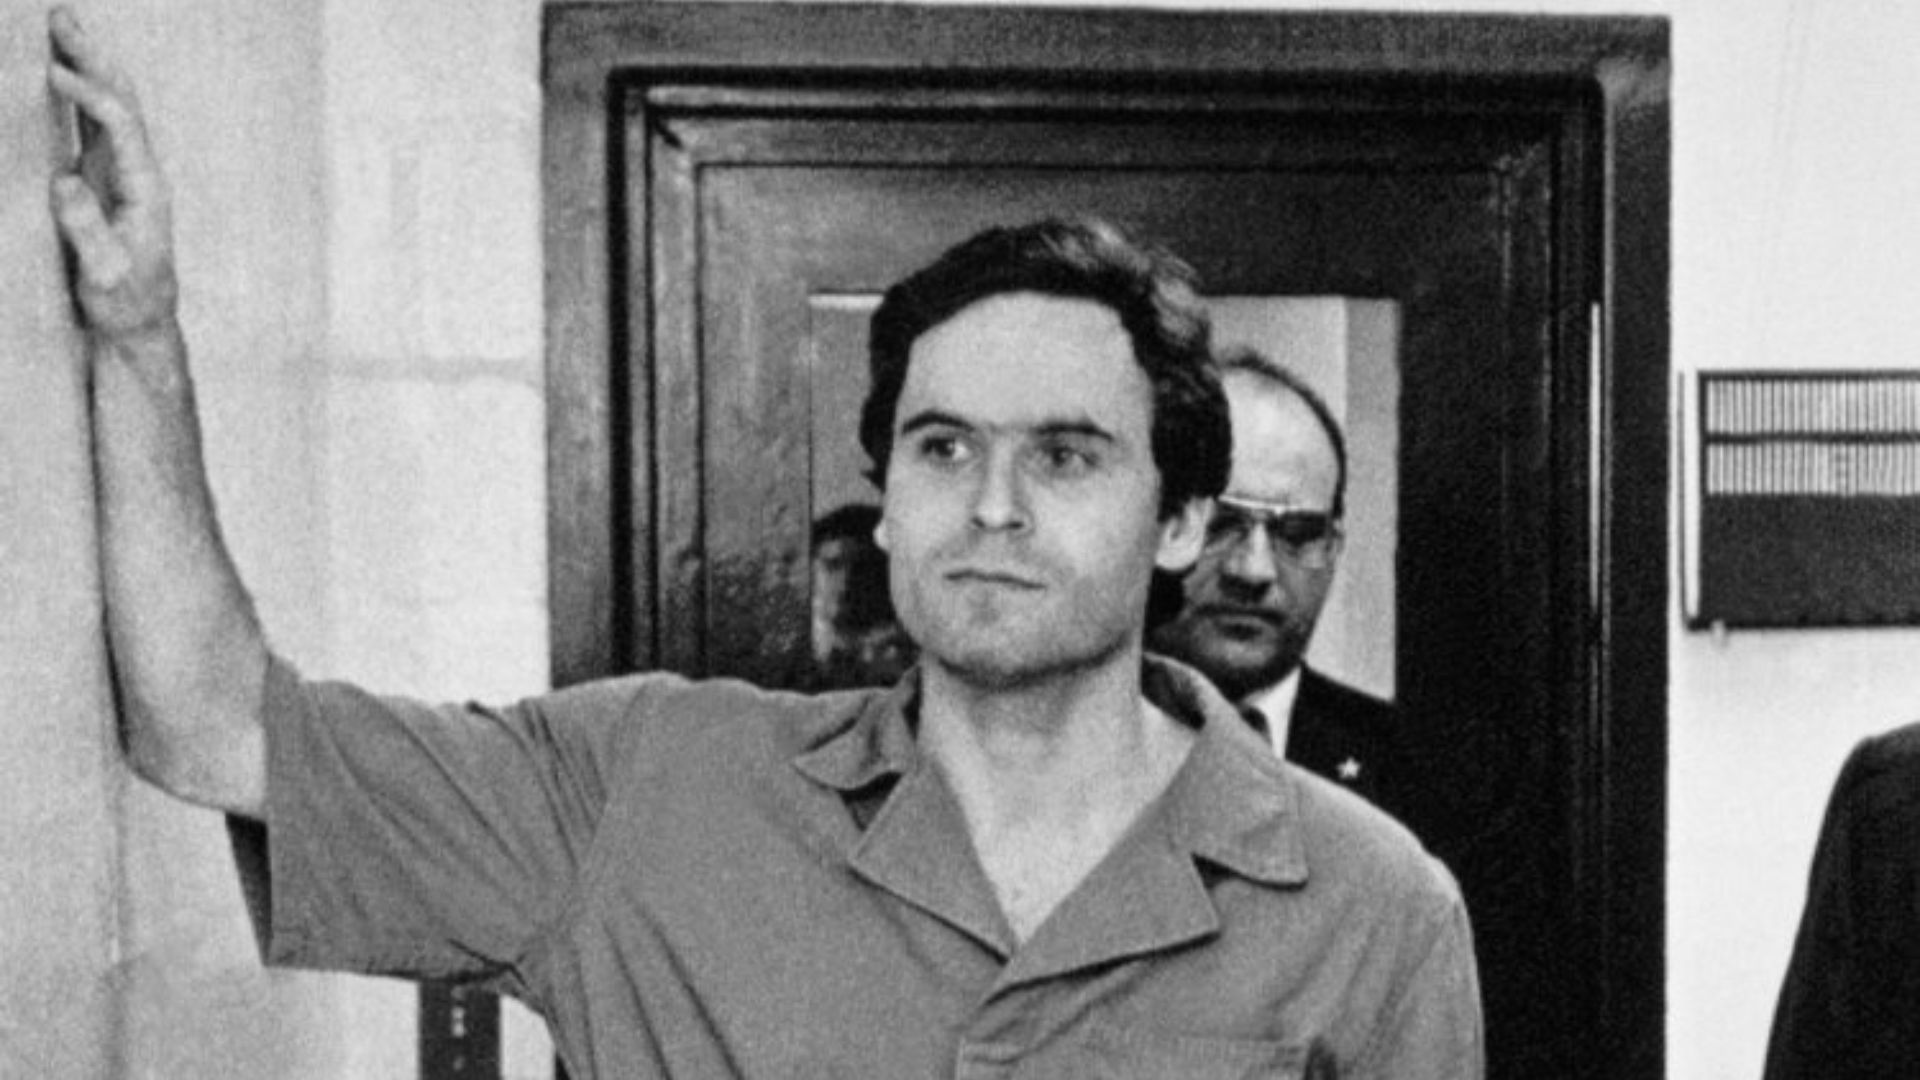 Serial killer series: Ted Bundy tapes